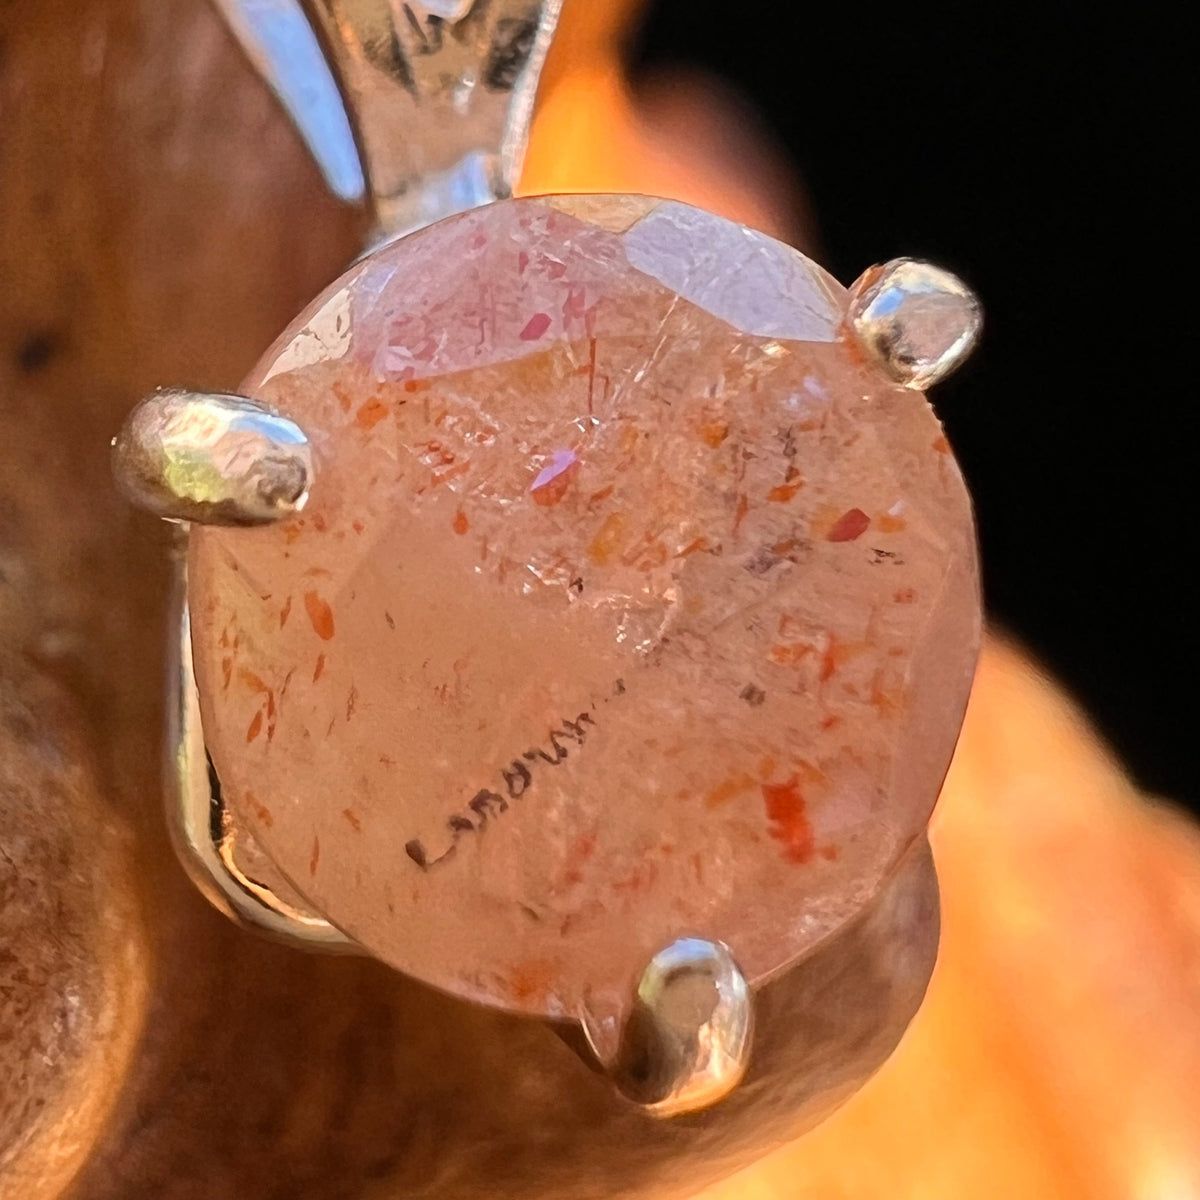 Sunstone Necklace Sterling Silver #6280-Moldavite Life